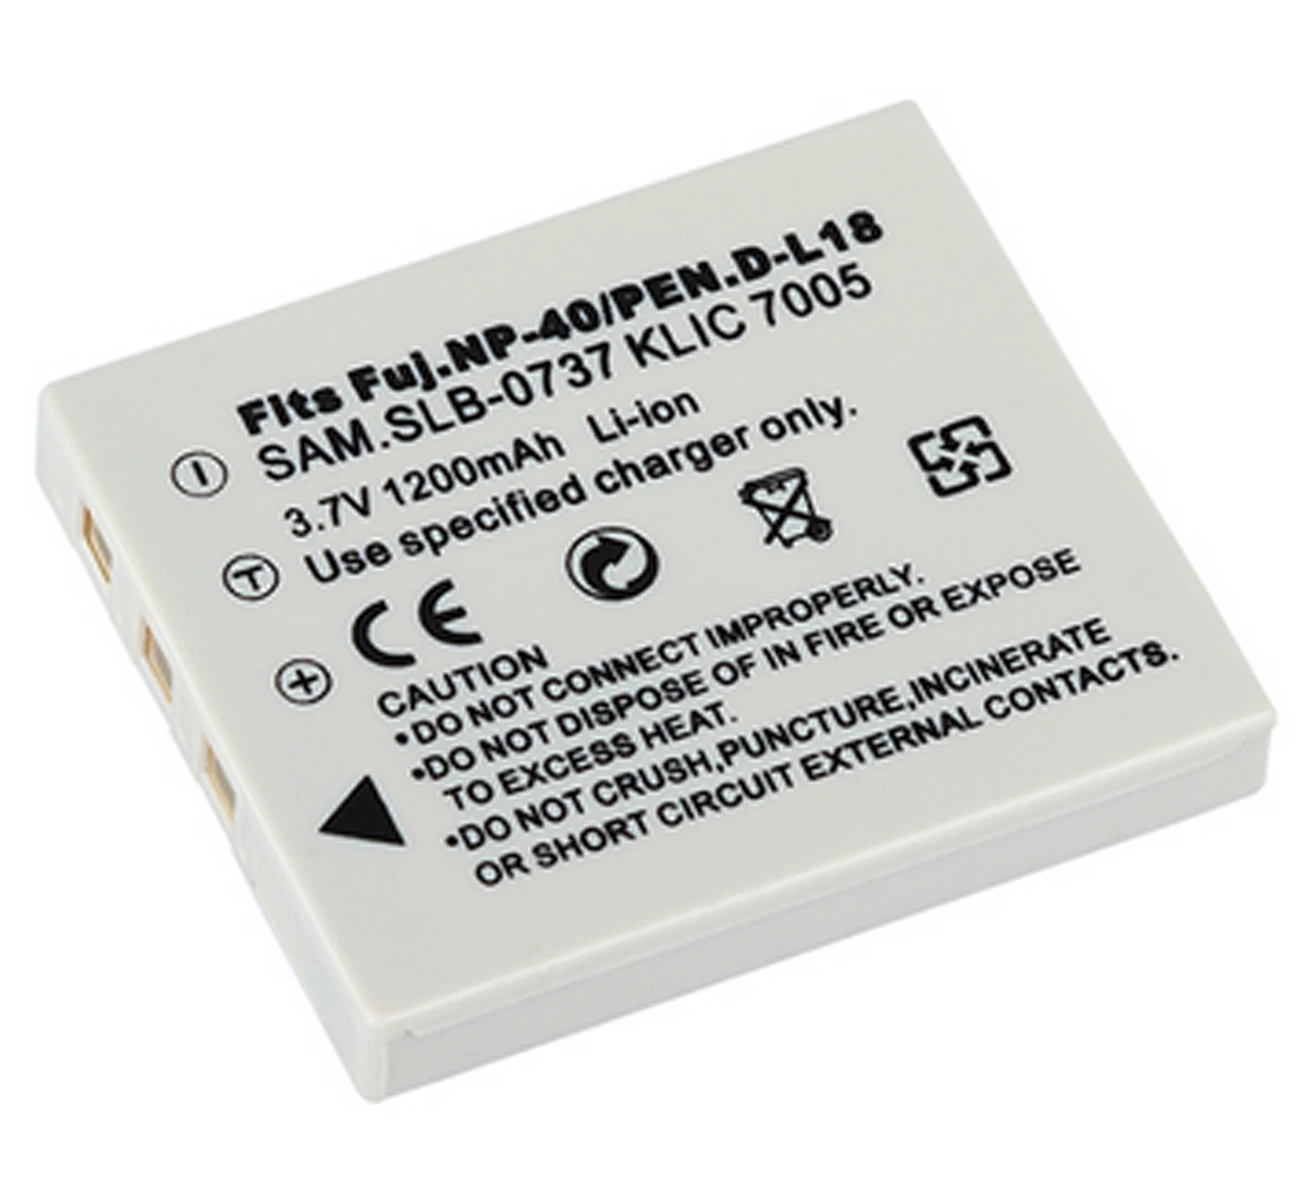 Battery Pack for Panasonic Lumix DMC-FX2 DMC-FX7 and Kodak EasyShare C763 Digital Camera